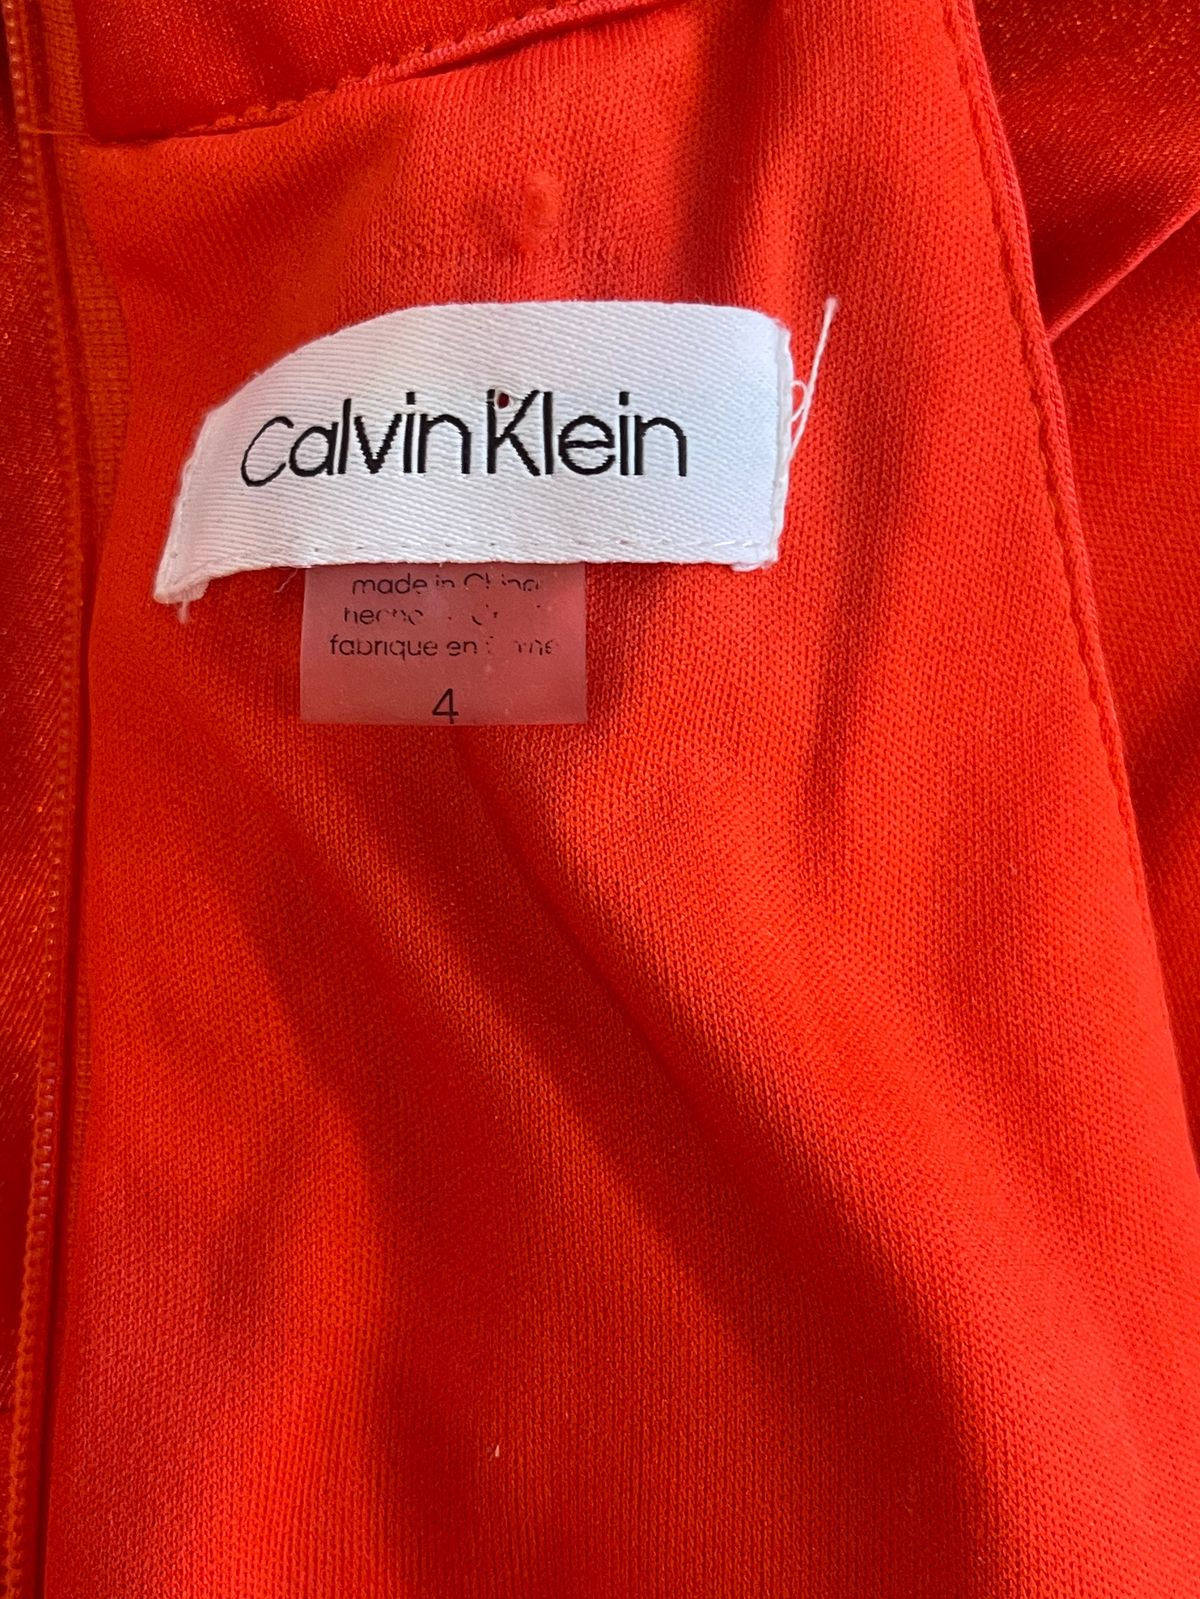 Calvin Klein Size 4 Bridesmaid High Neck Red Mermaid Dress on Queenly